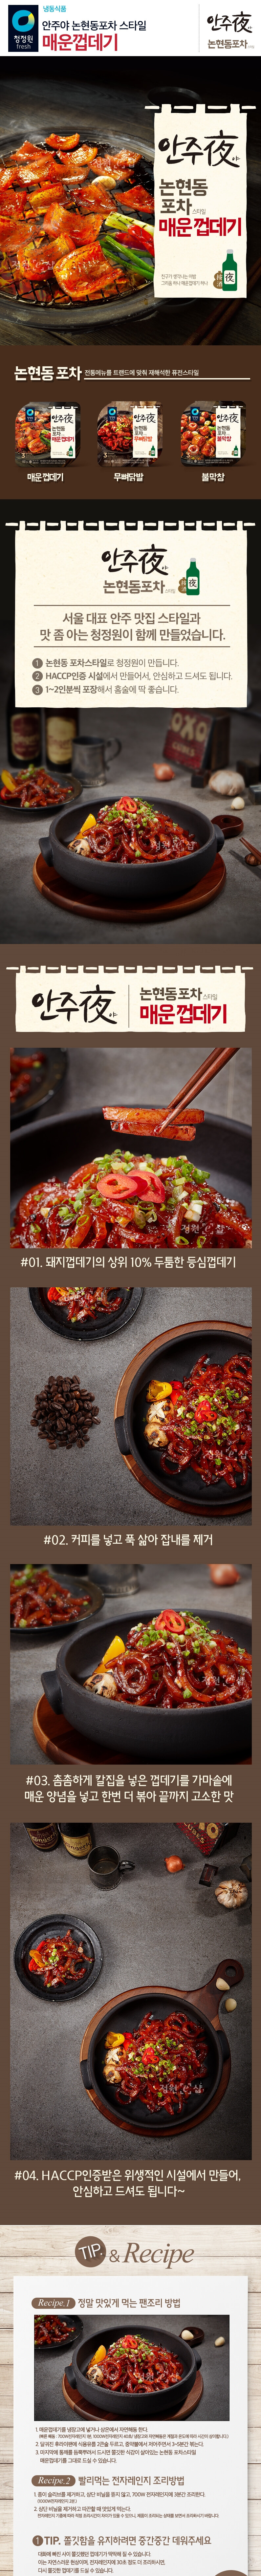 韓國食品-[CJO] Spicy Pork Rinds 180g